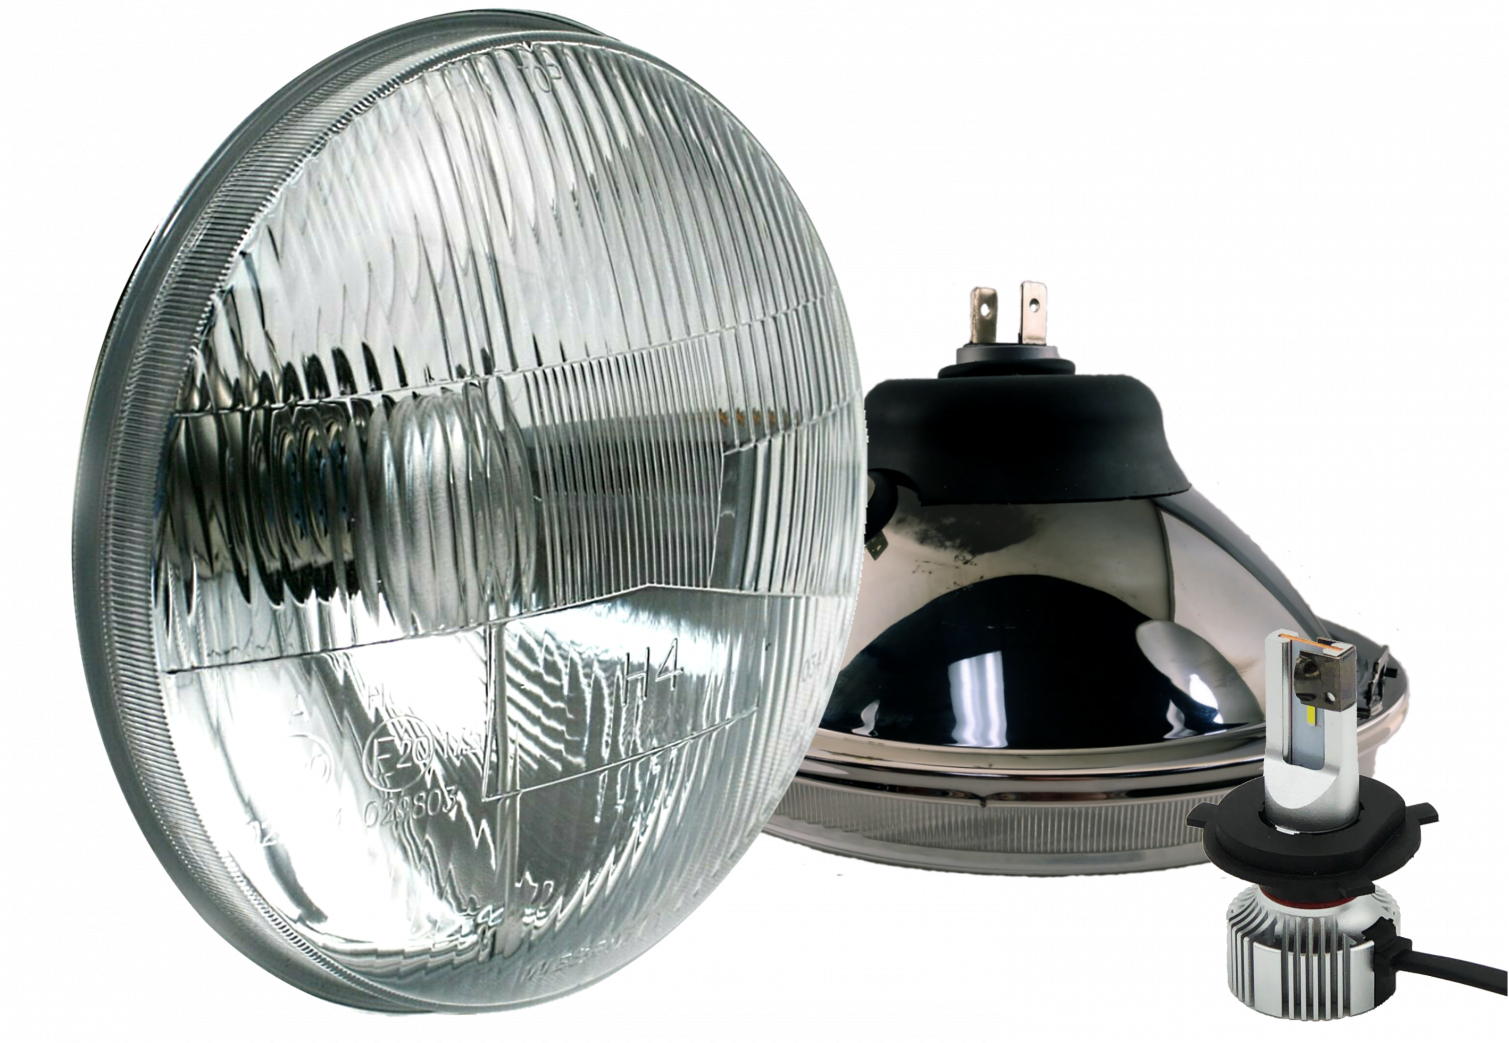 Undvigende i gang Amfibiekøretøjer Classic 7" inch LED Headlight (SINGLE)